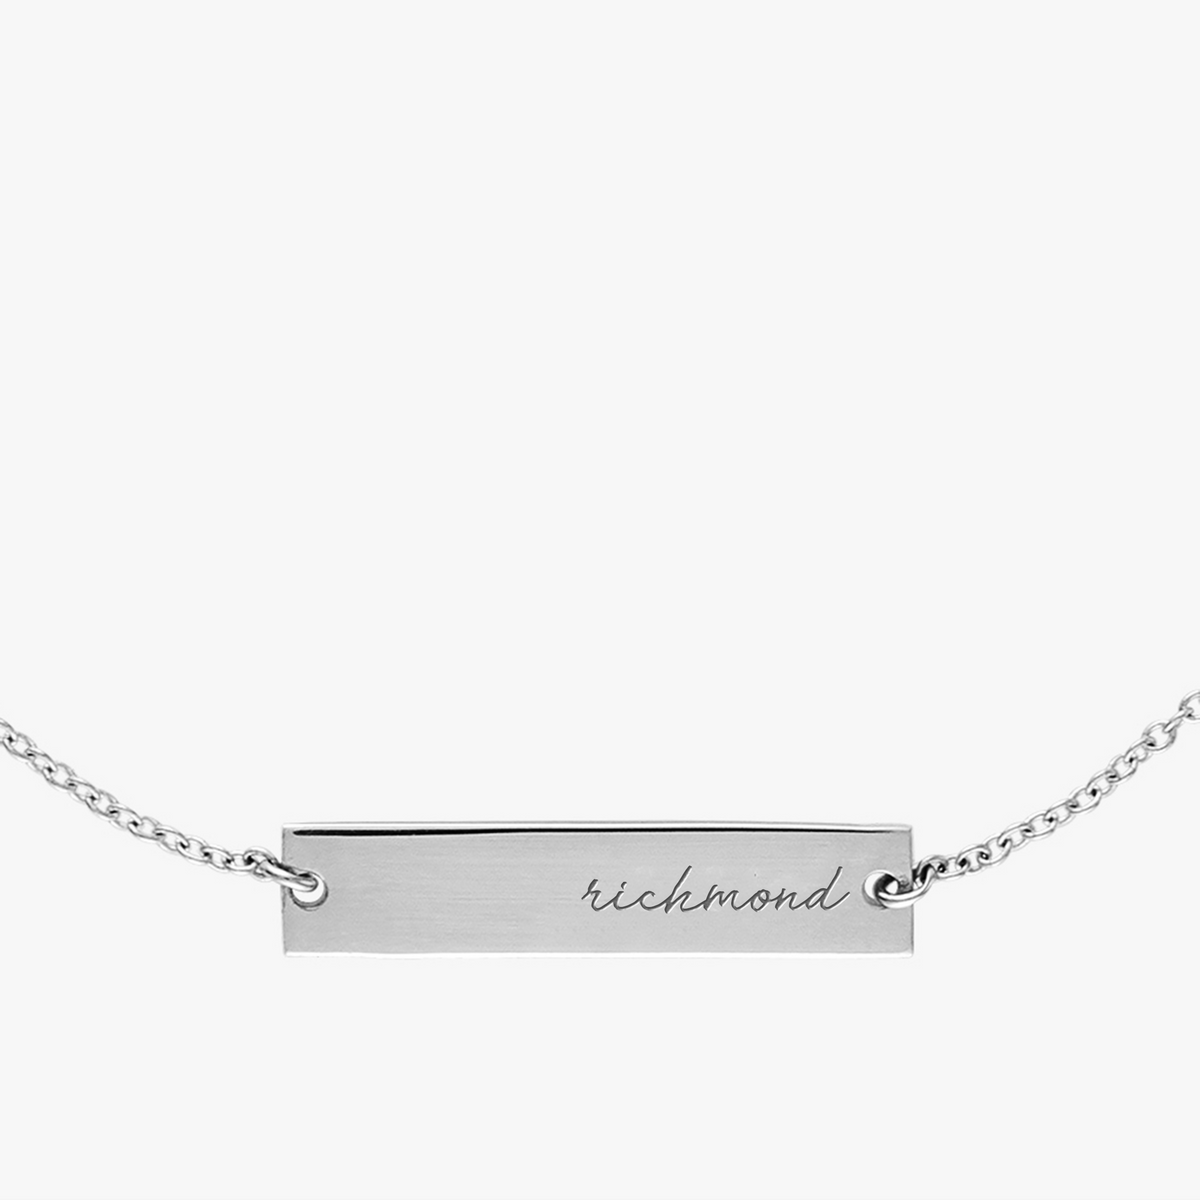 Richmond University Horizontal Necklace Sterling Silver Close Up